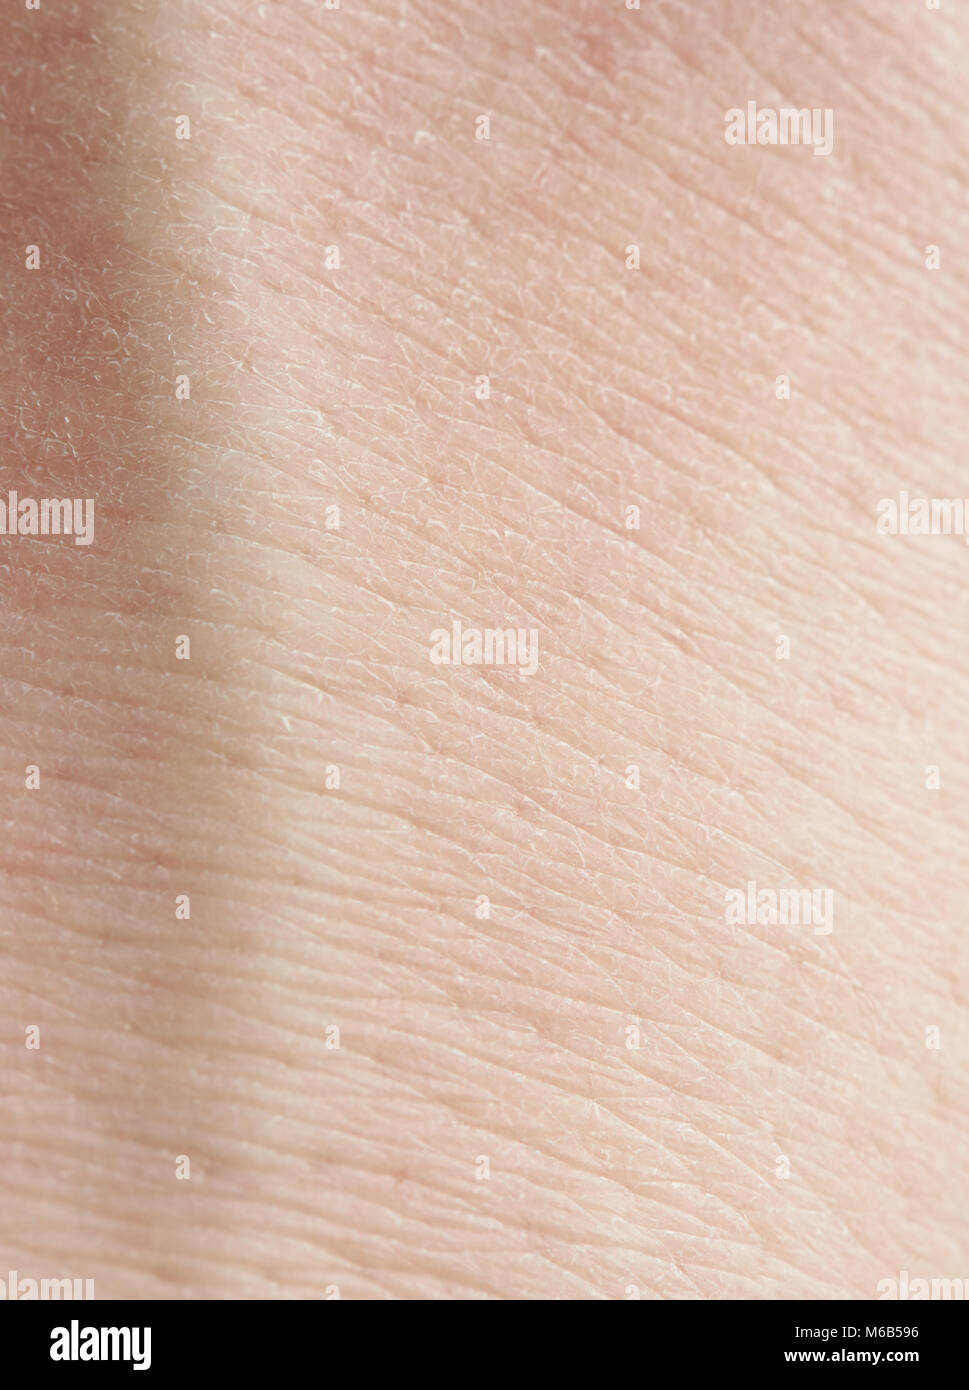 Asciugare cauacaian pelle umana tetxure macro close up Foto Stock